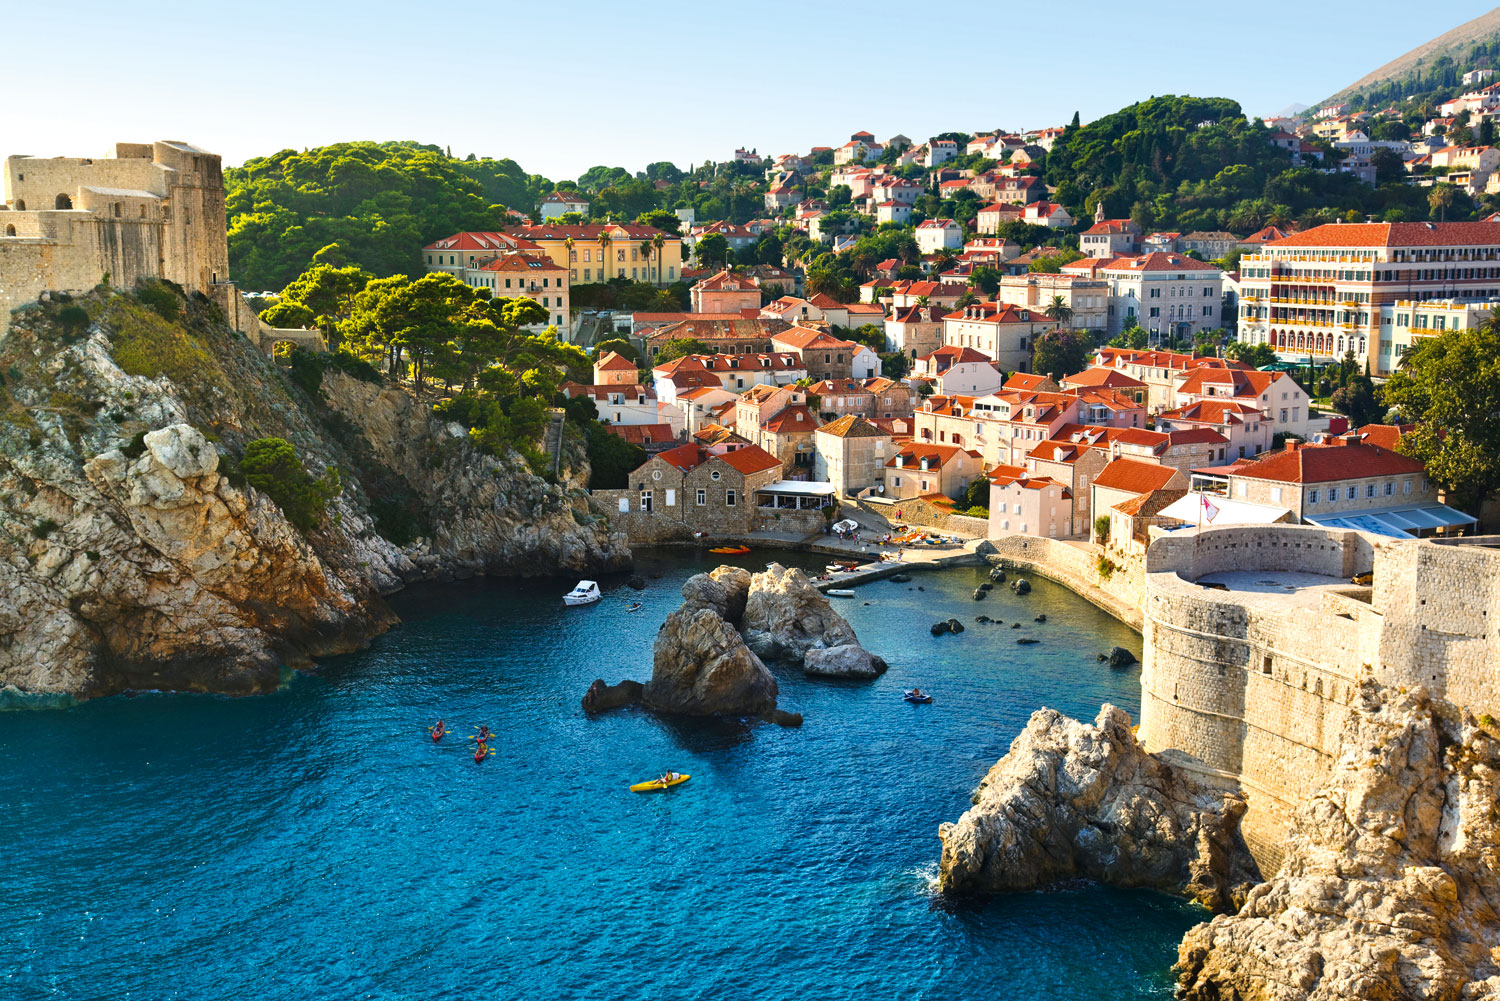 https://s1.it.atcdn.net/wp-content/uploads/2013/02/Dubrovnik.jpg